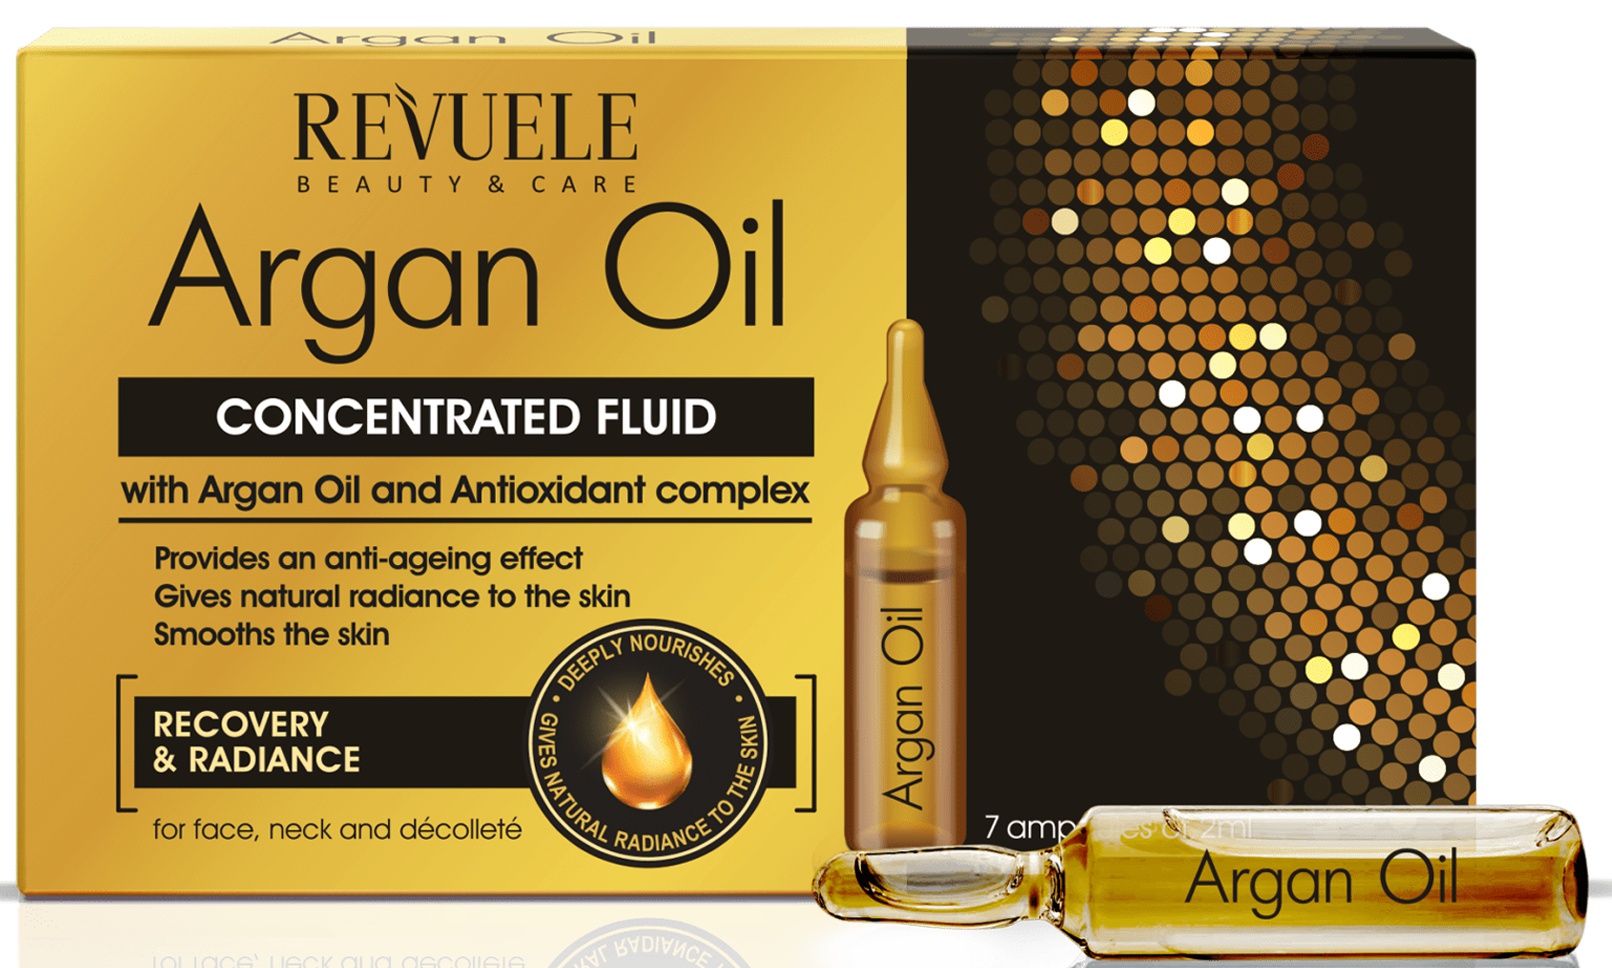 Revuele Argan Oil Concentrated Fluid